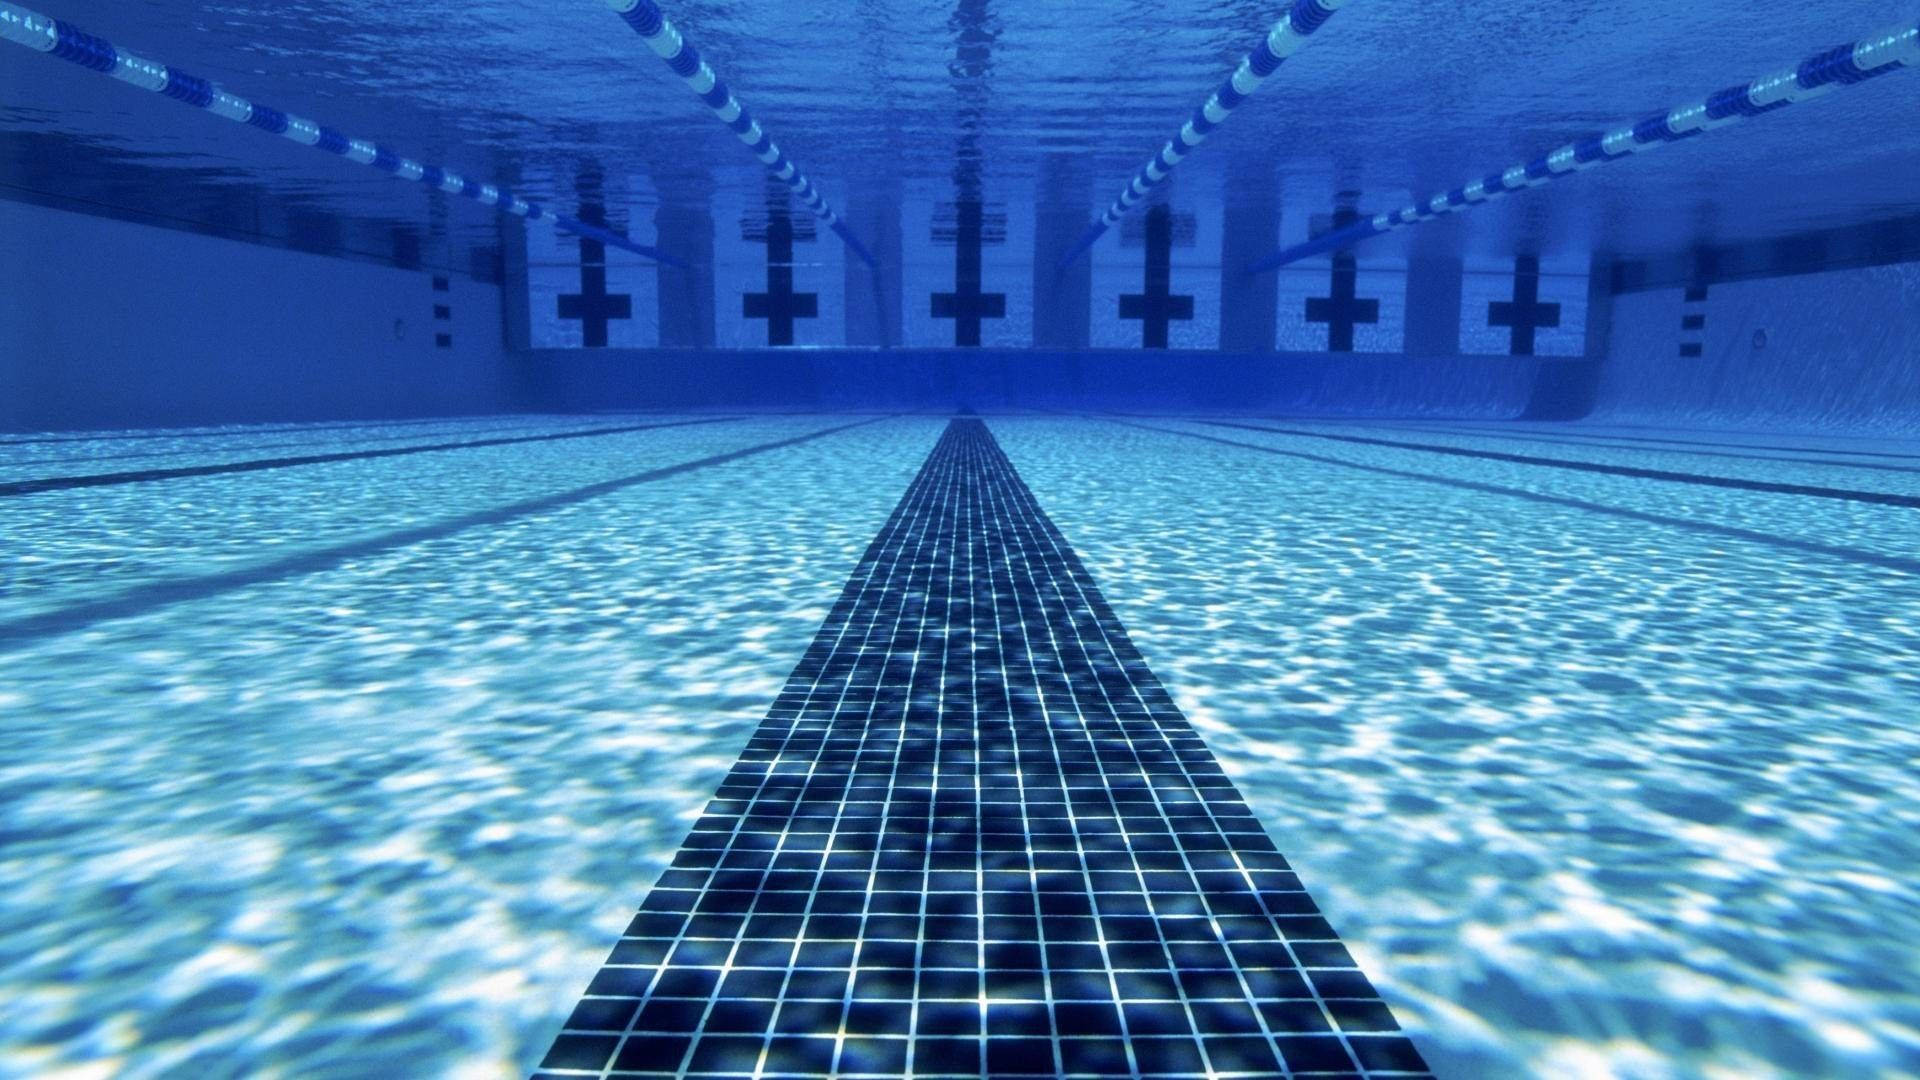 Top 999+ Swimming Pool Wallpaper Full HD, 4K✅Free to Use